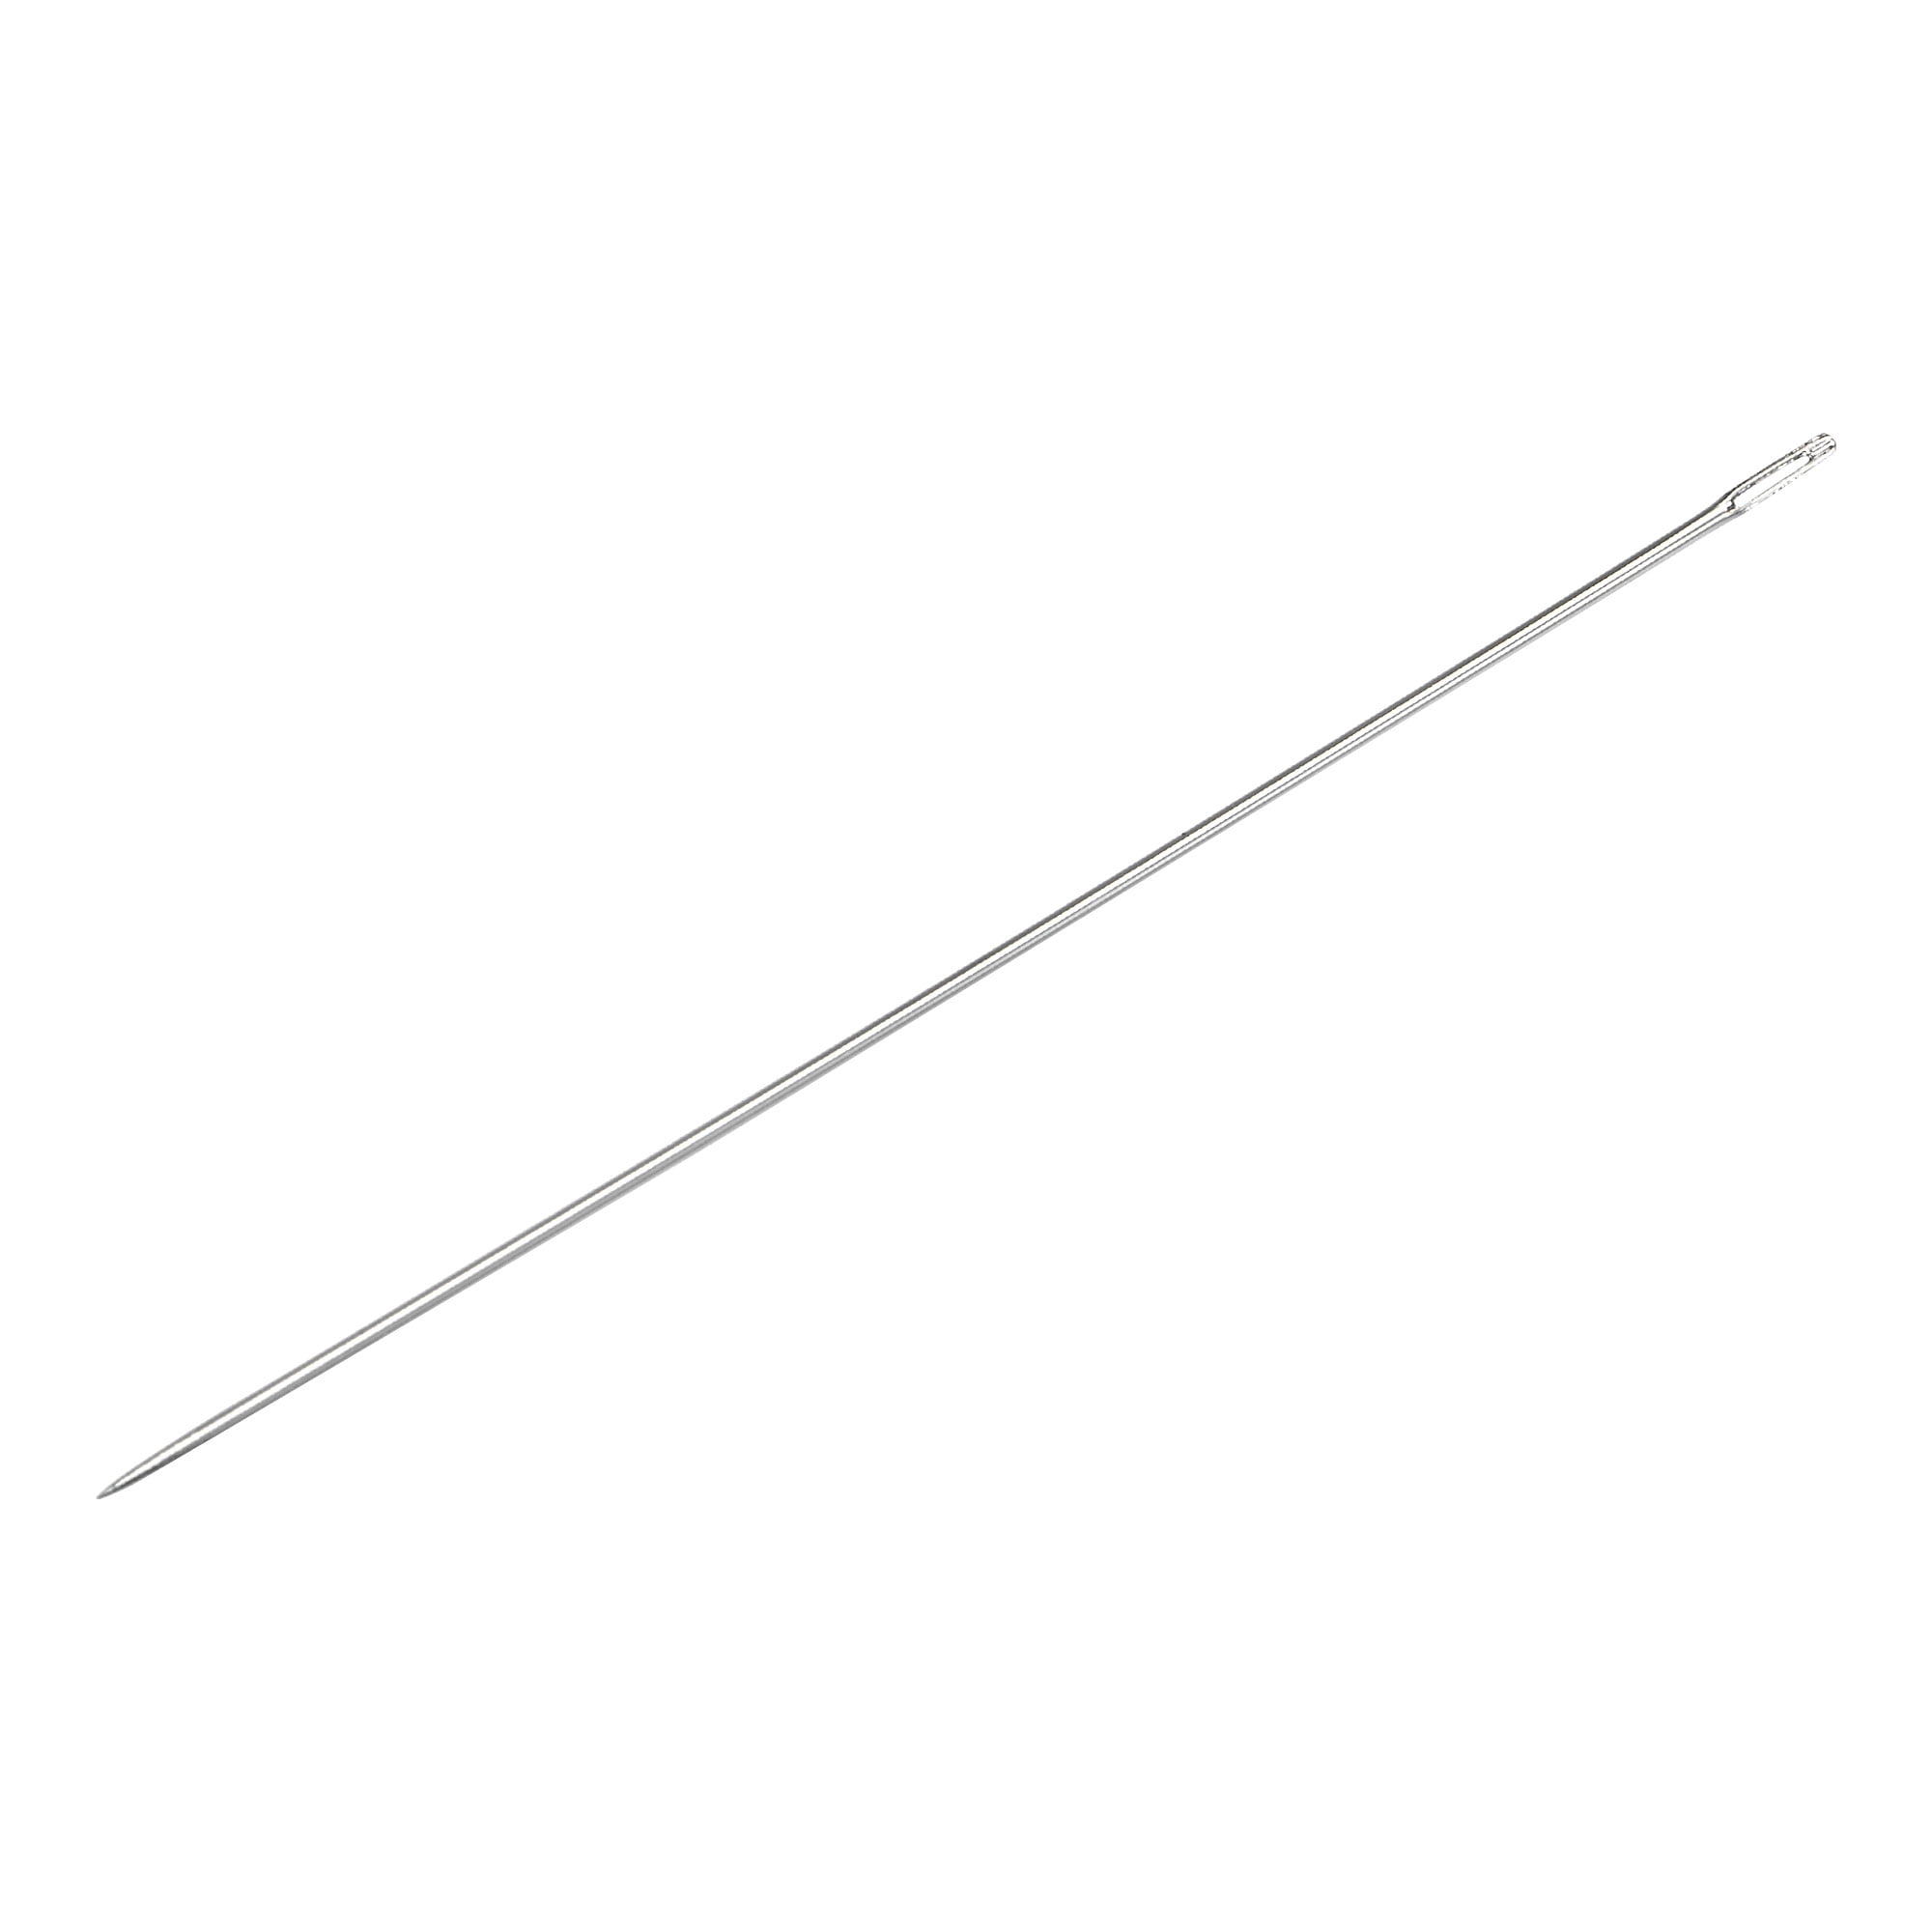 24-Piece Stainless Steel Self-Threading Needles Set - Easy Thread